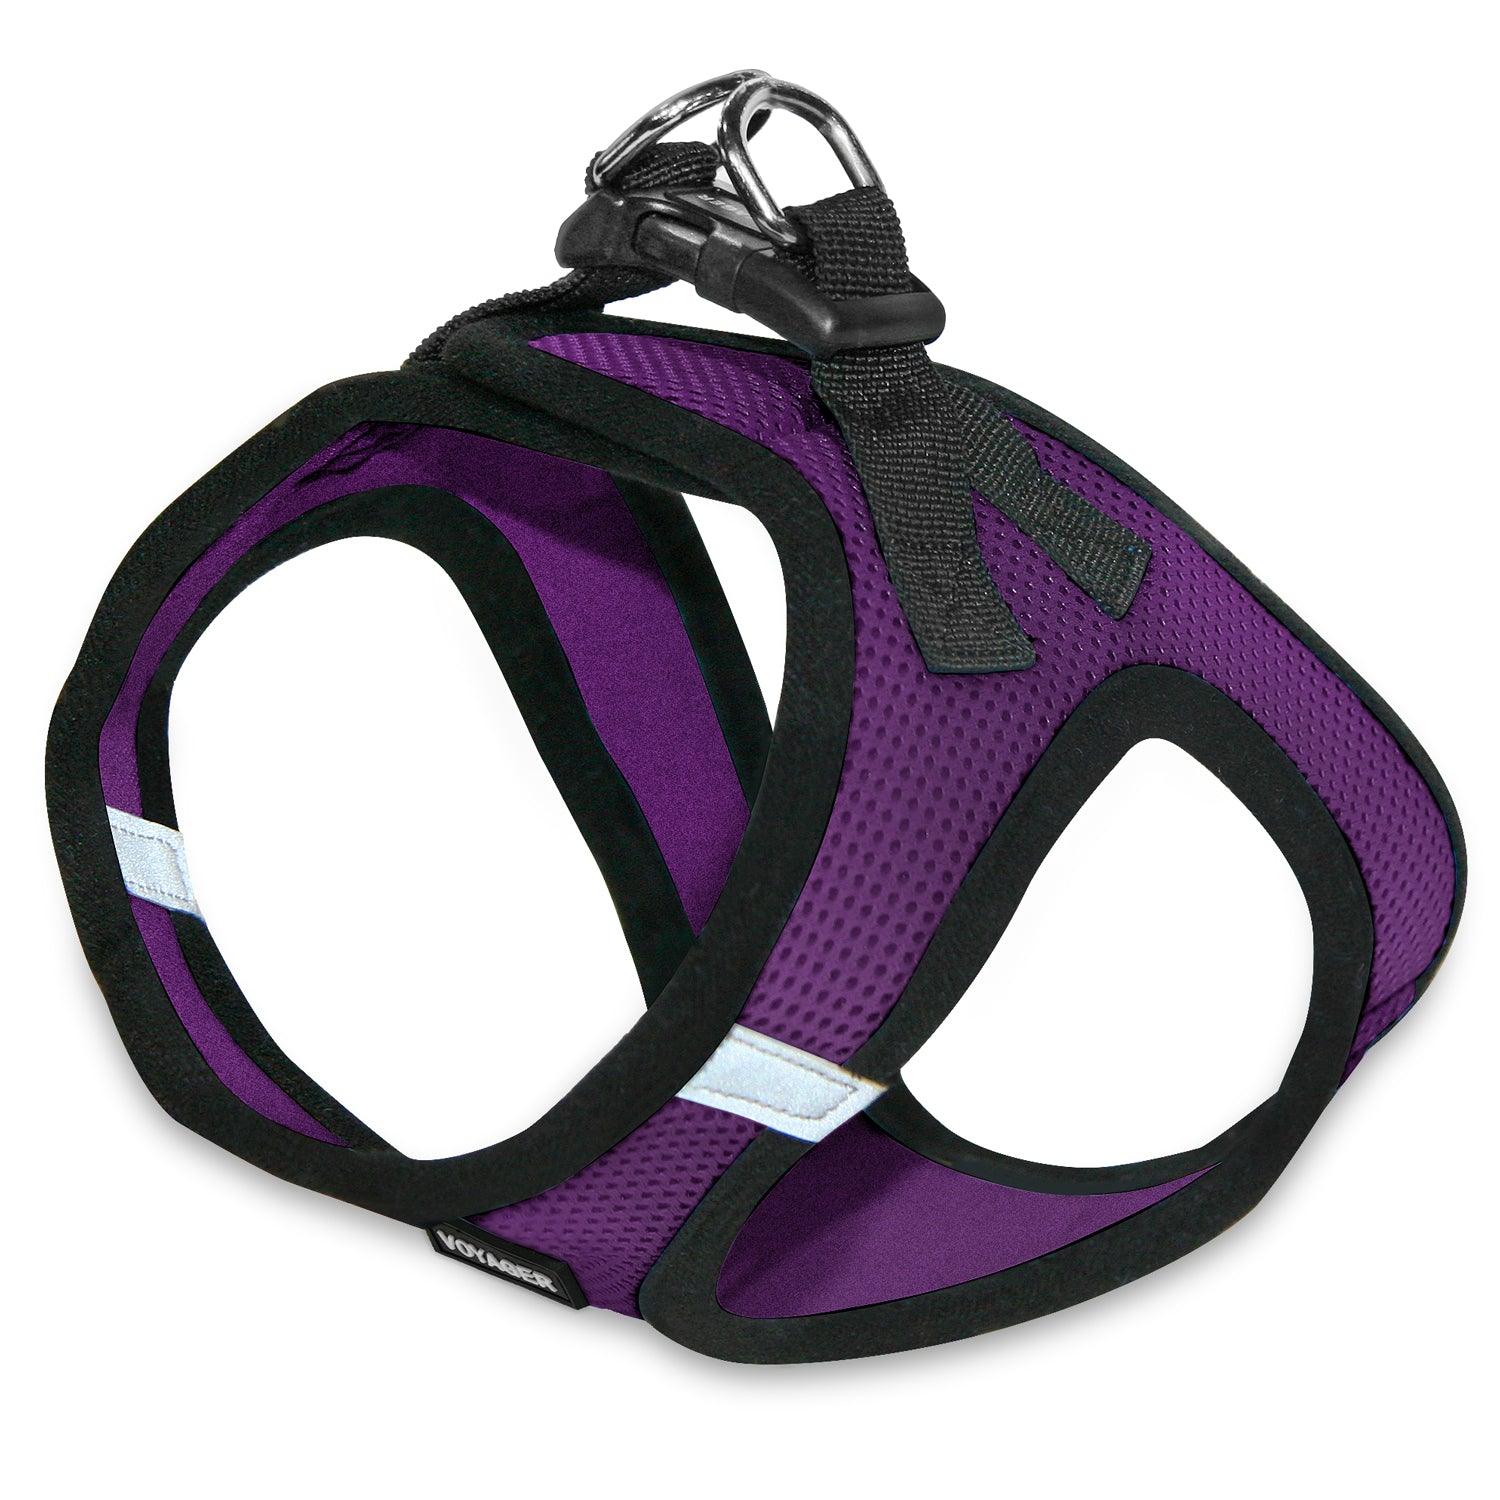 Voyager Step-In Flex Adjustable Dog Harness for All Breeds, Breathable Mesh, Purple, L